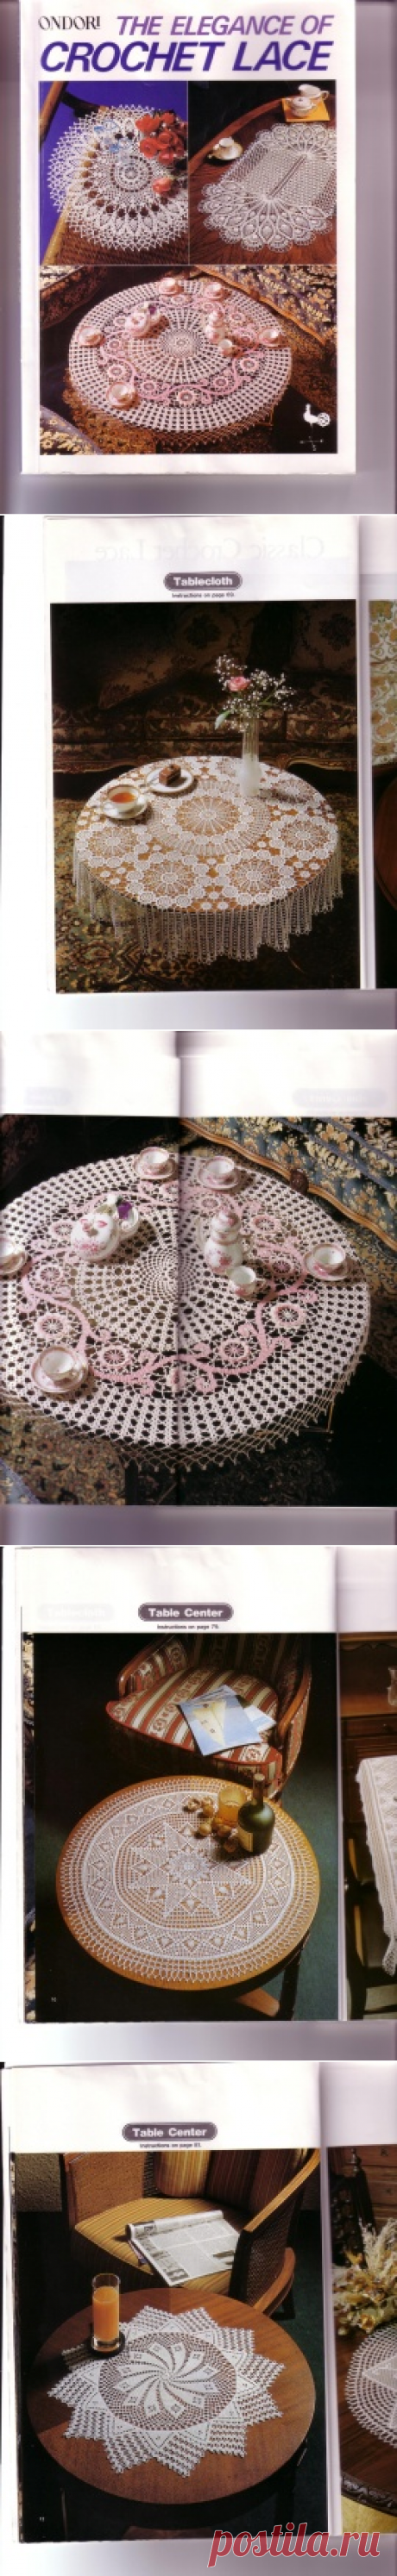 ONDORI The Elegance of Crochet Lace